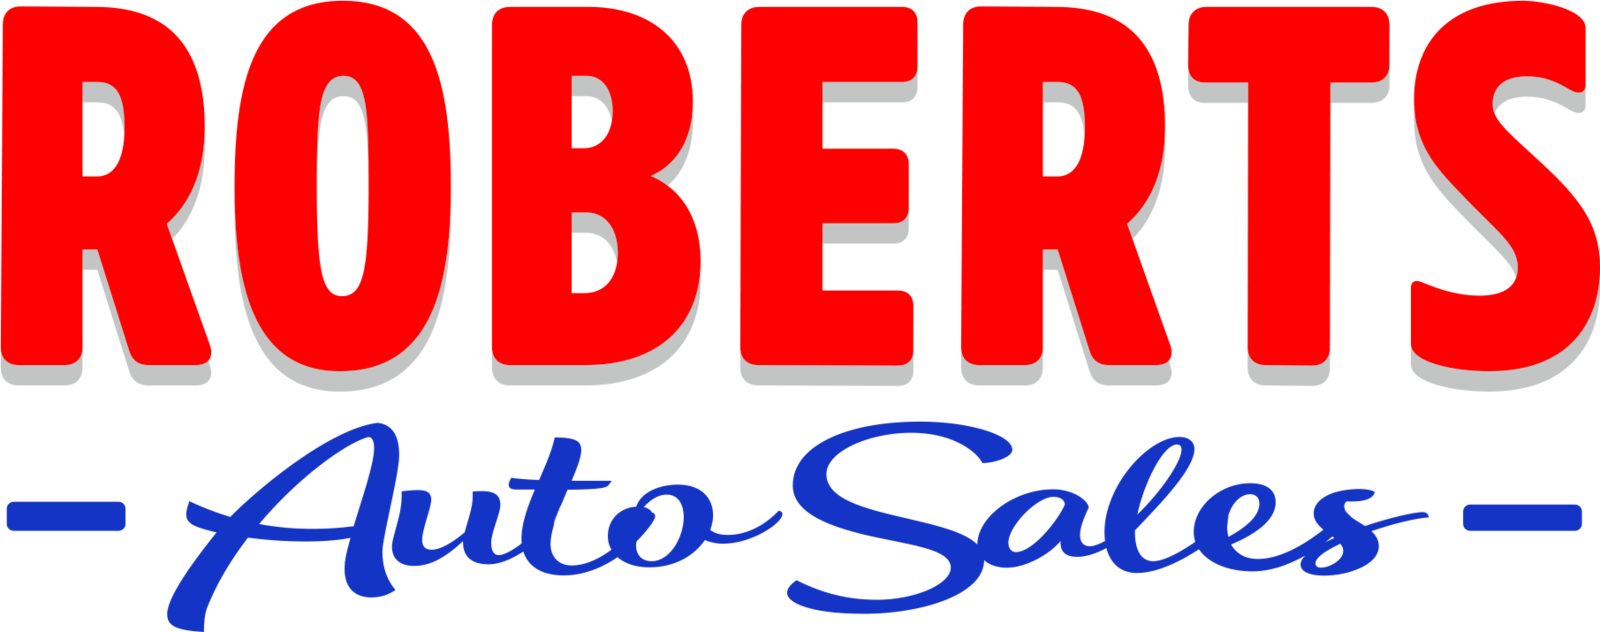 Roberts Auto Sales - .se (1600x632)